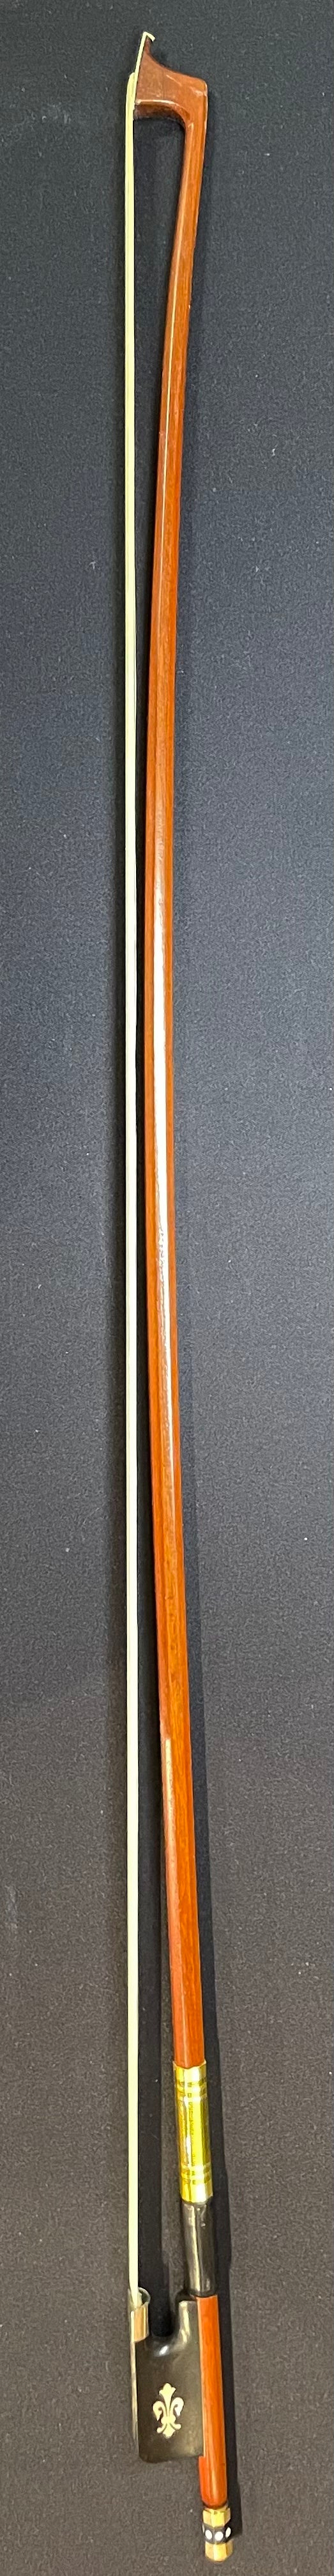 Full Size Viola Bow - MEDB Wood Model